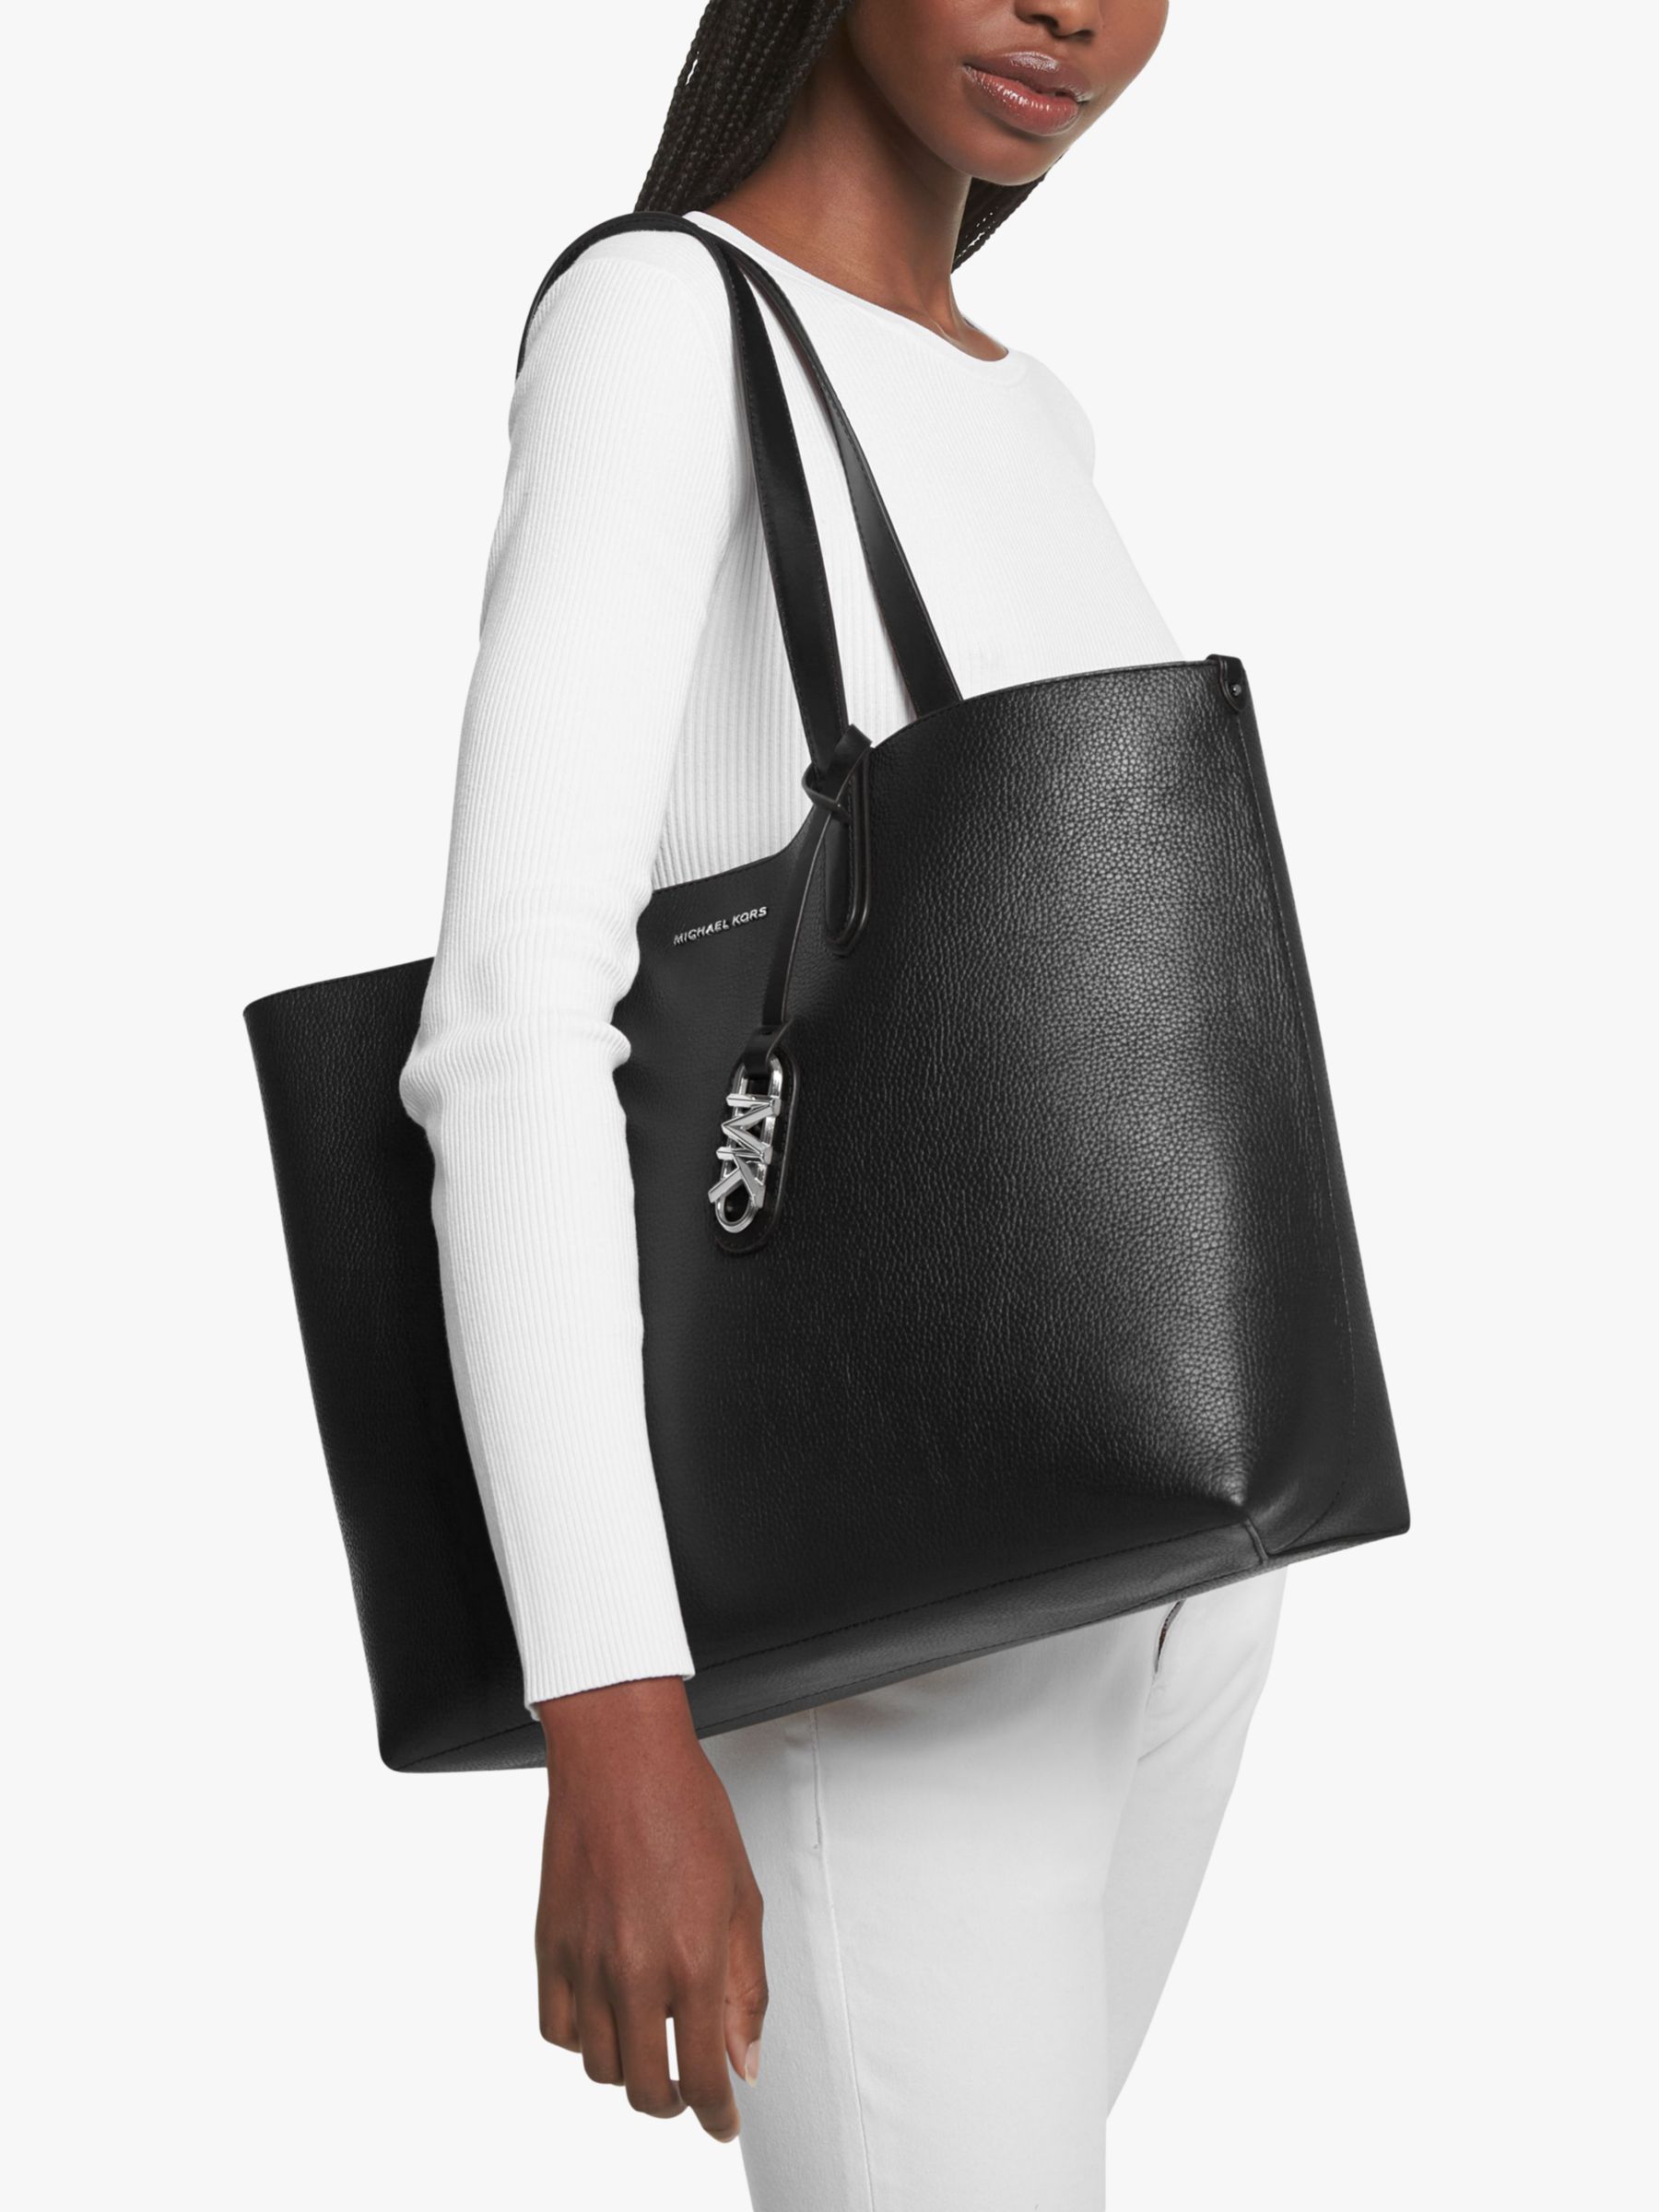 Michael Kors Eliza Leather Tote Bag, Black at John Lewis & Partners